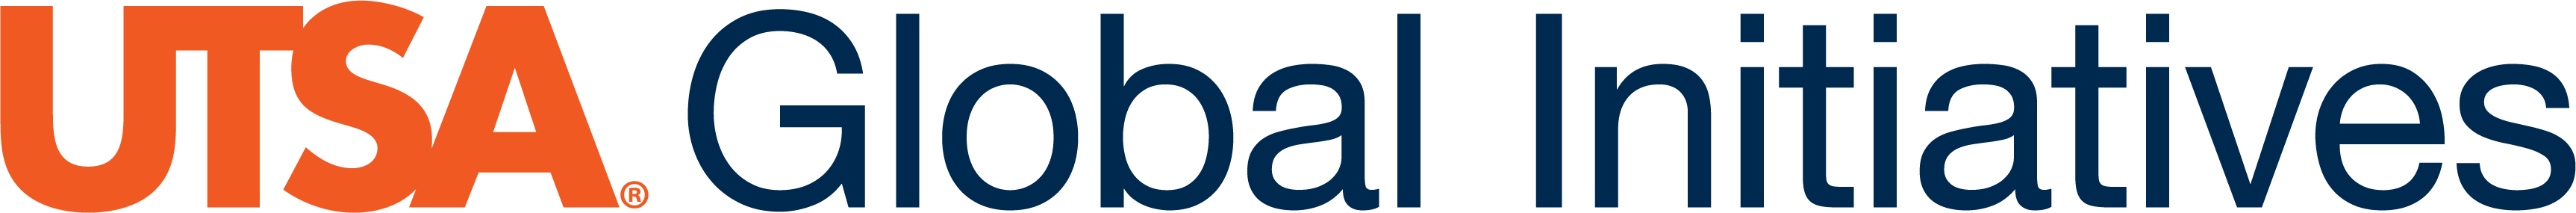 UTSA Global Initiatives Logo